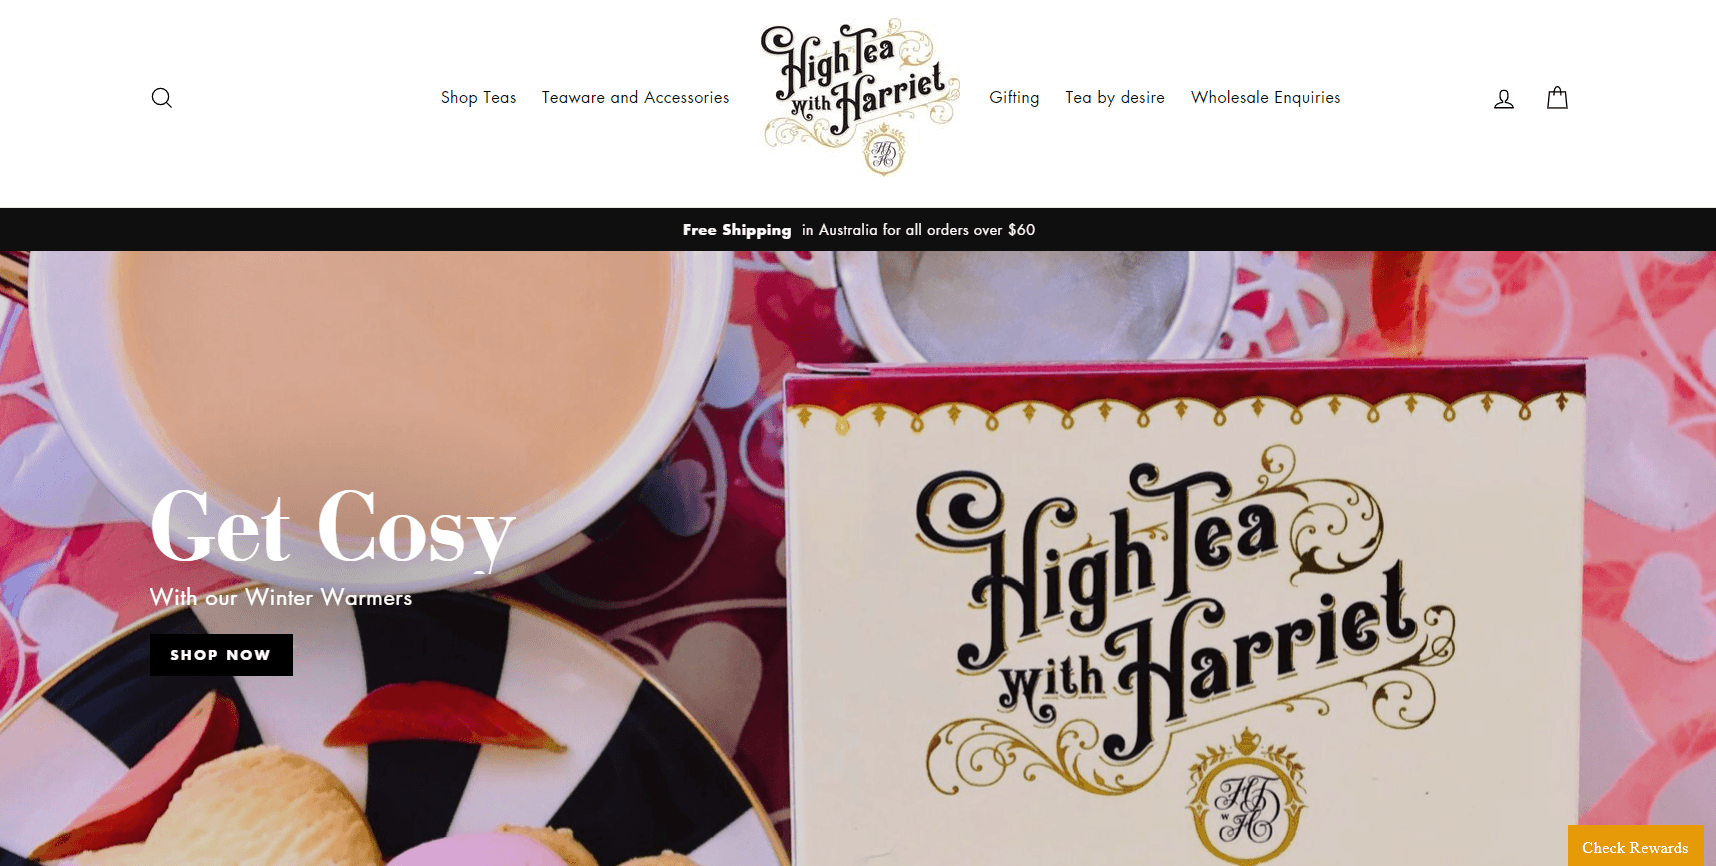 Tea webshop, Web site #3